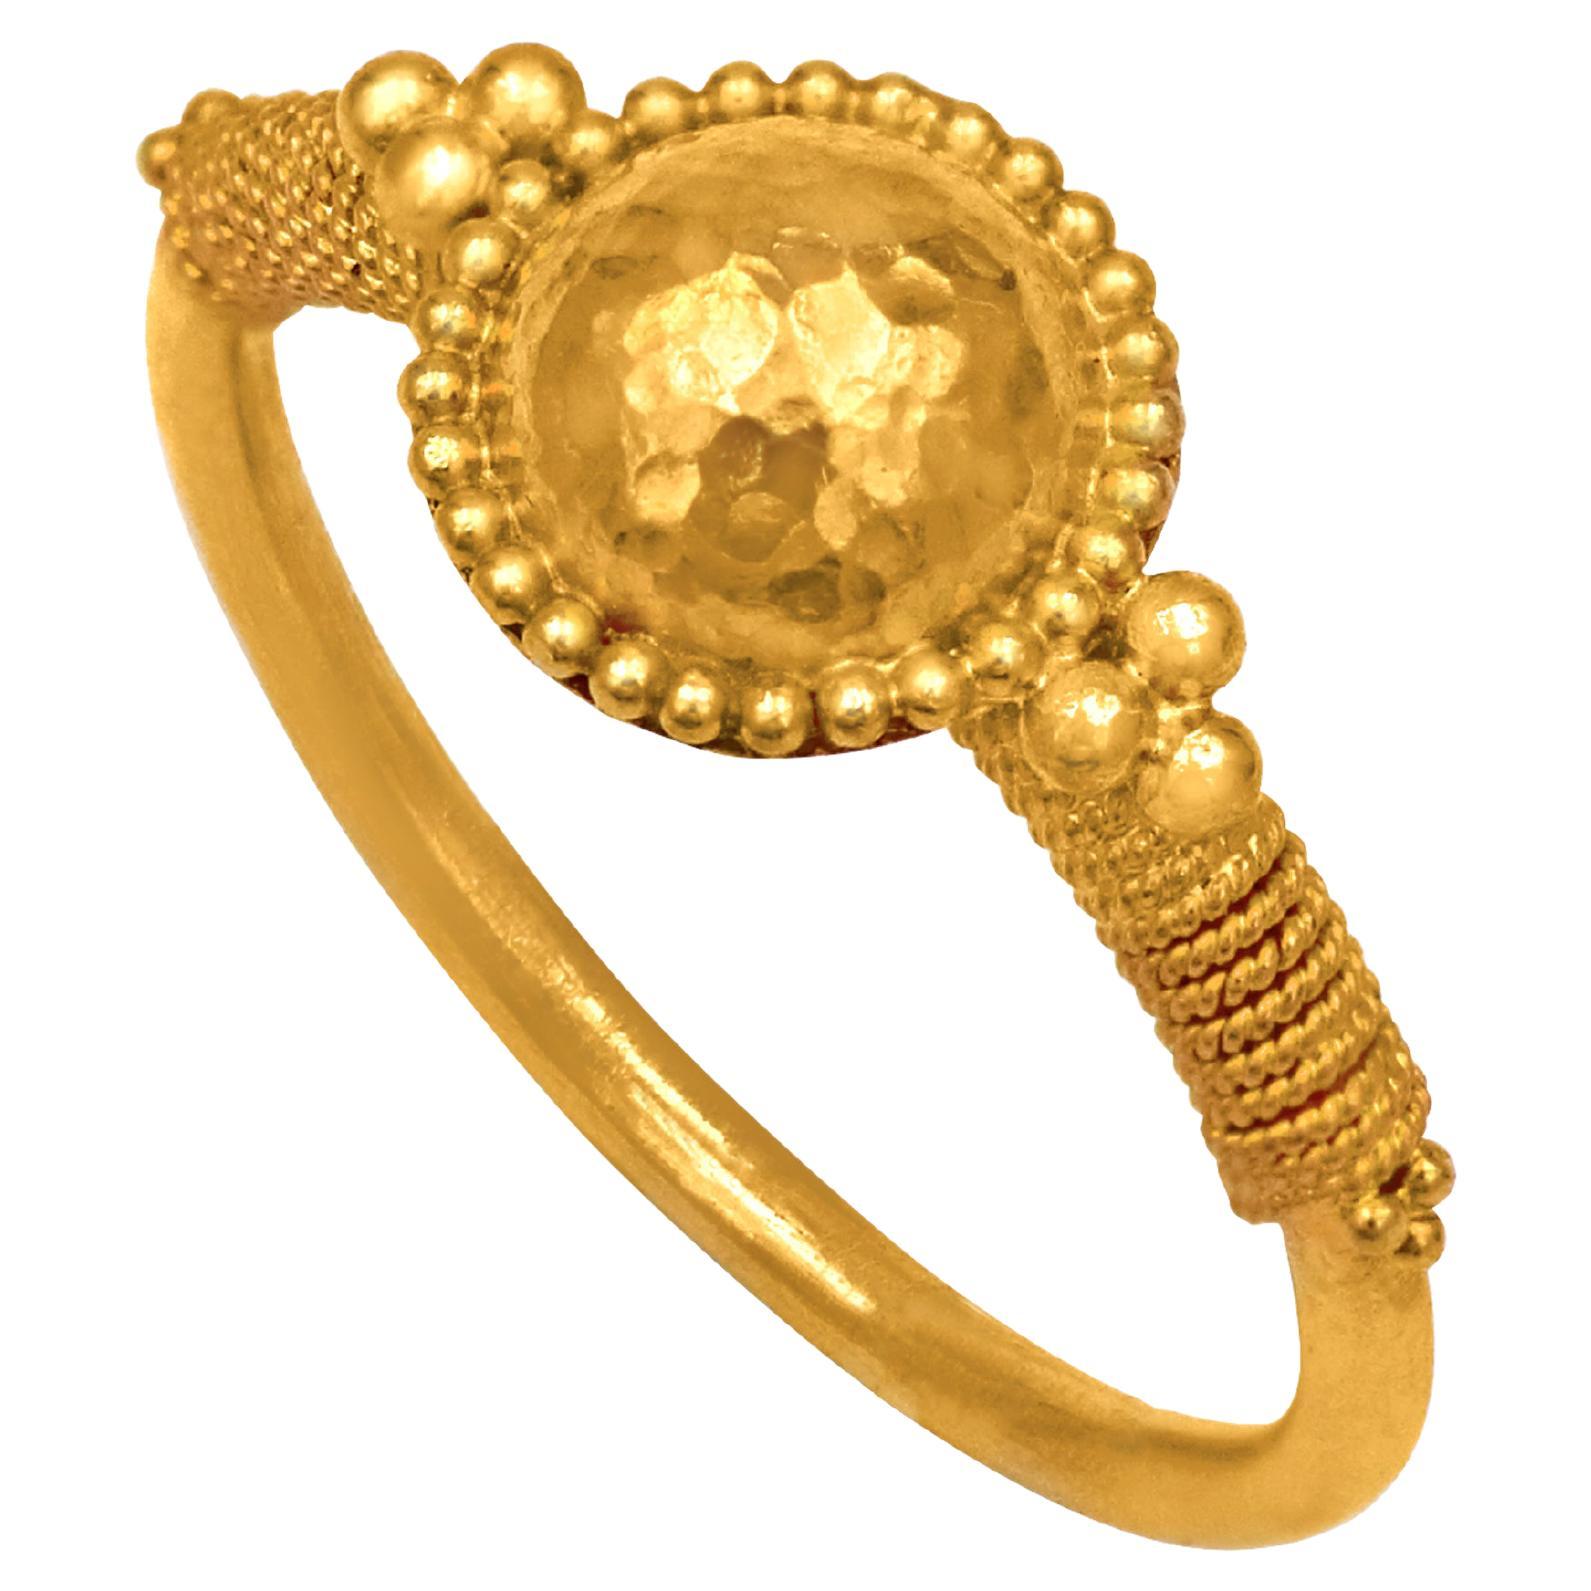 22k Gold Era's filigraner gehämmerter Ring